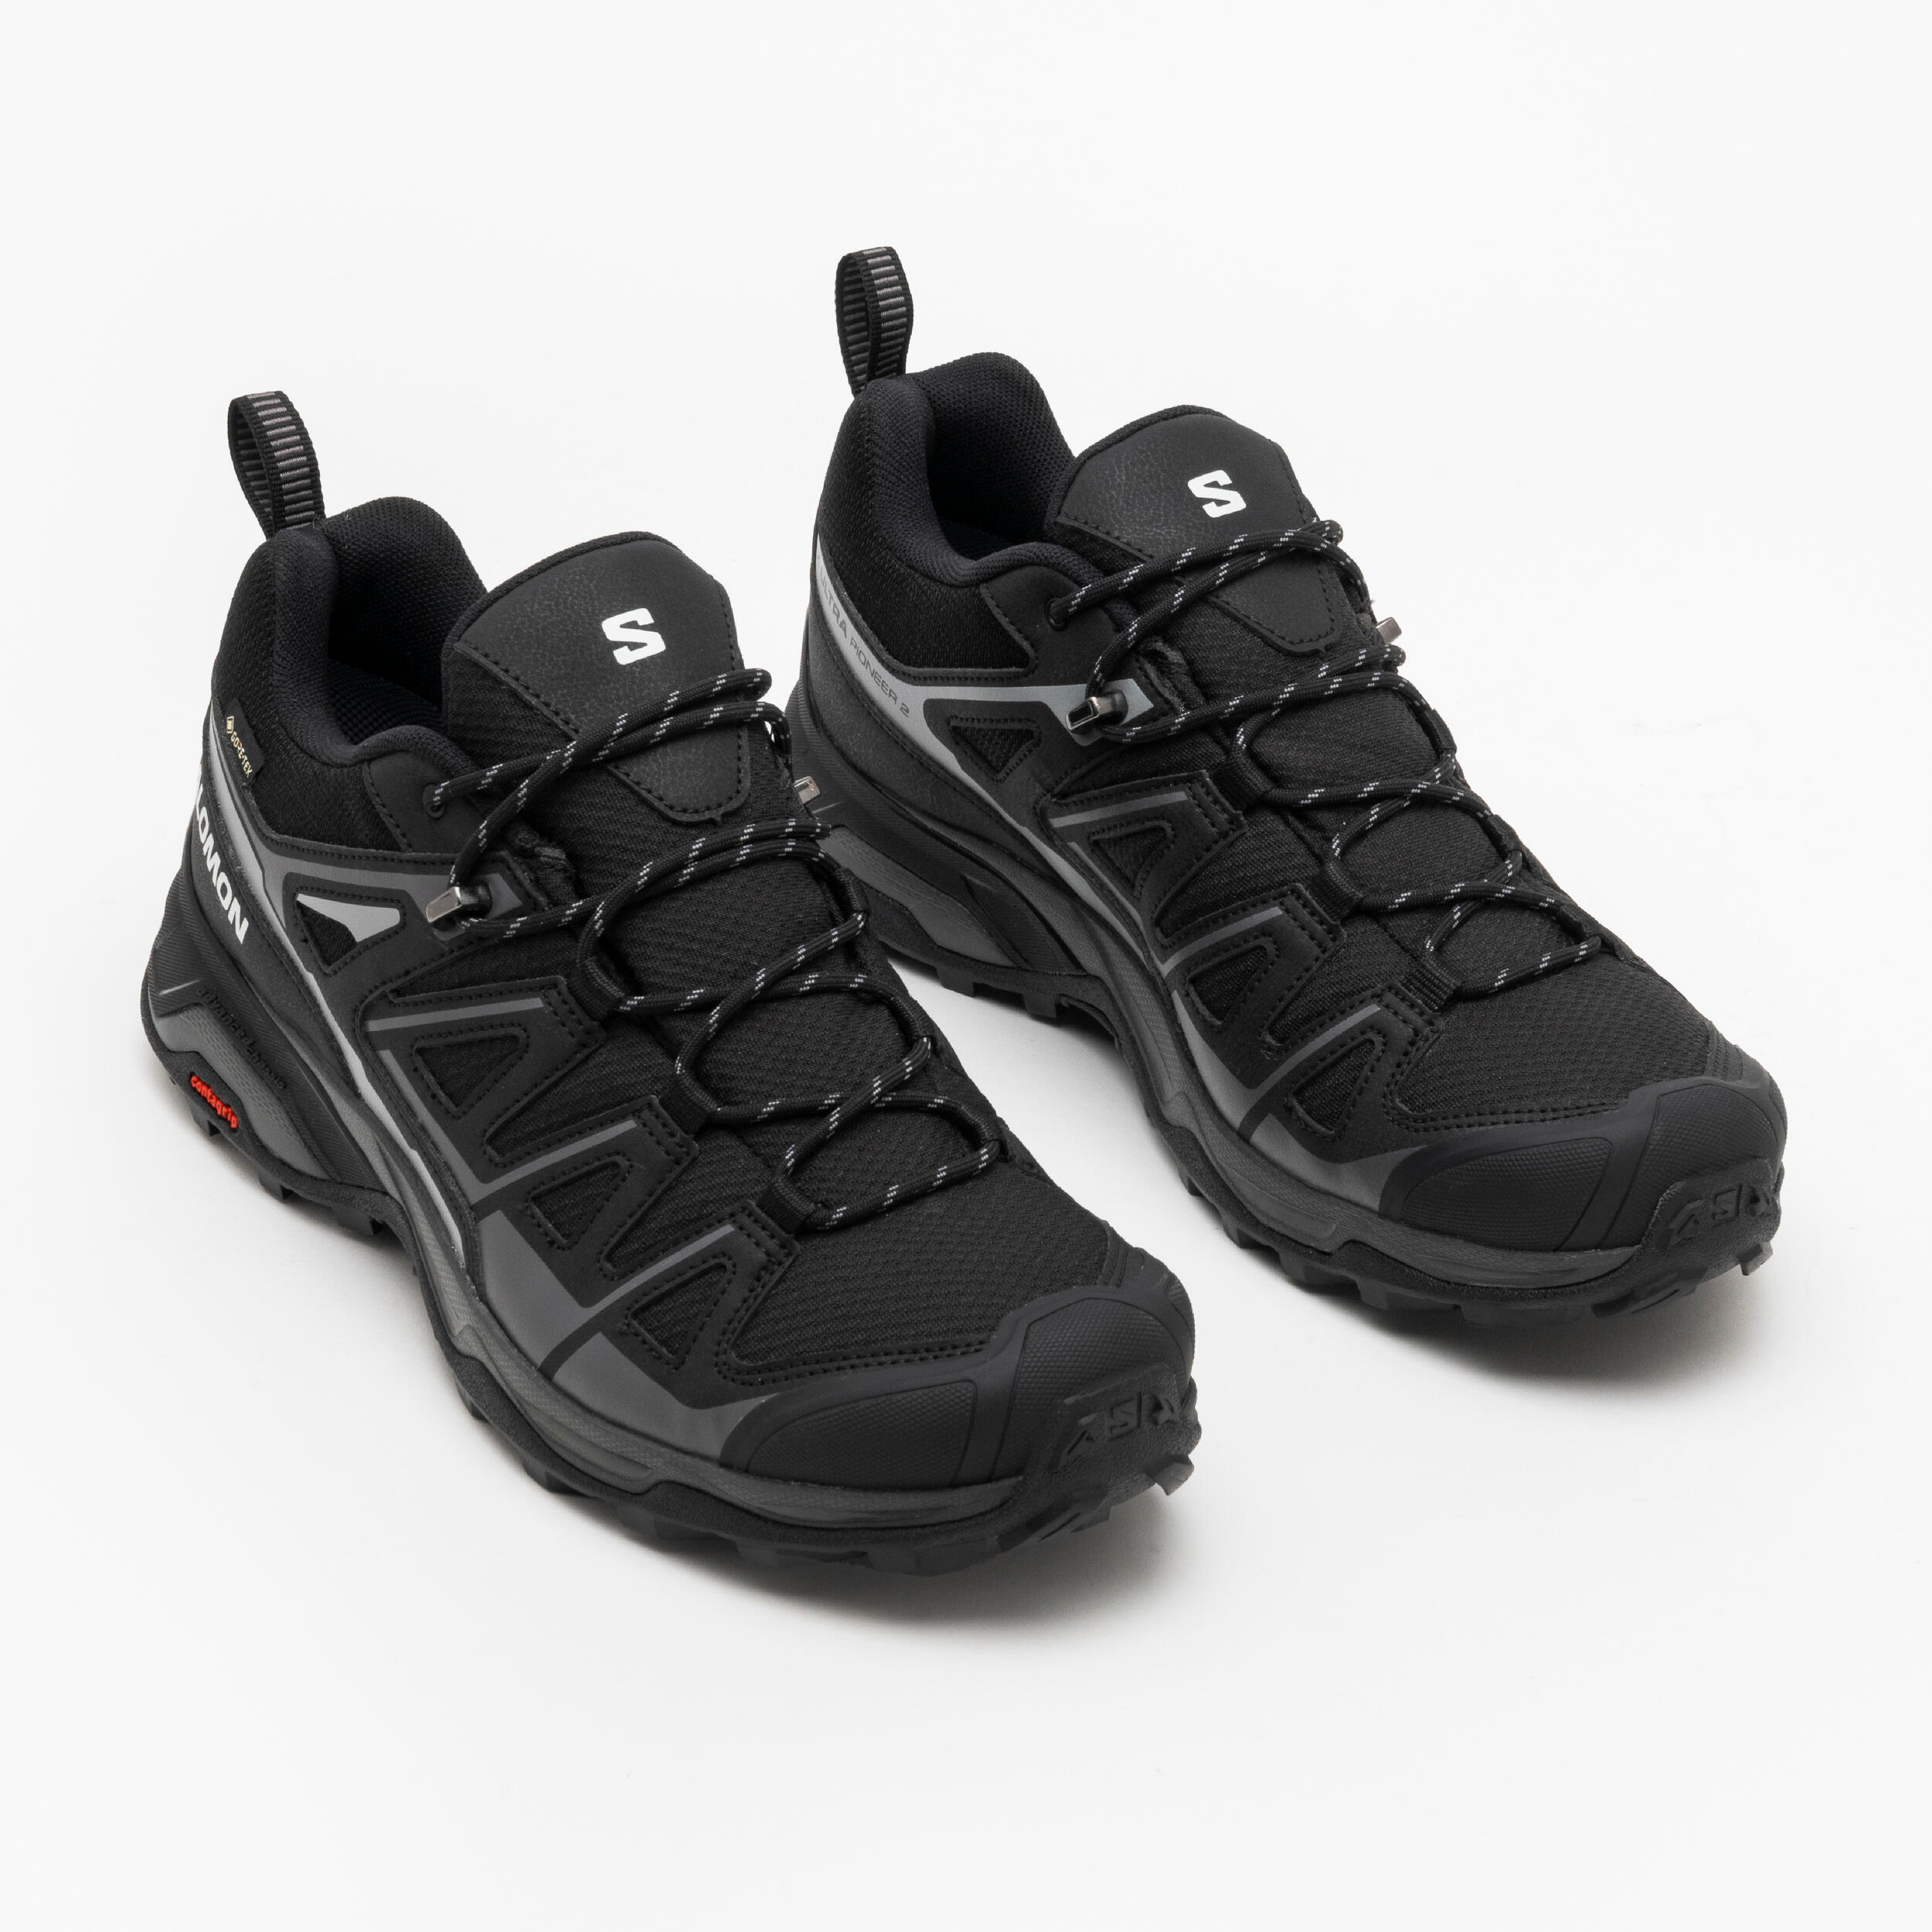 Men’s Waterproof Hiking Boots - Salomon X Ultra Pioneer 2 GTX 5/5